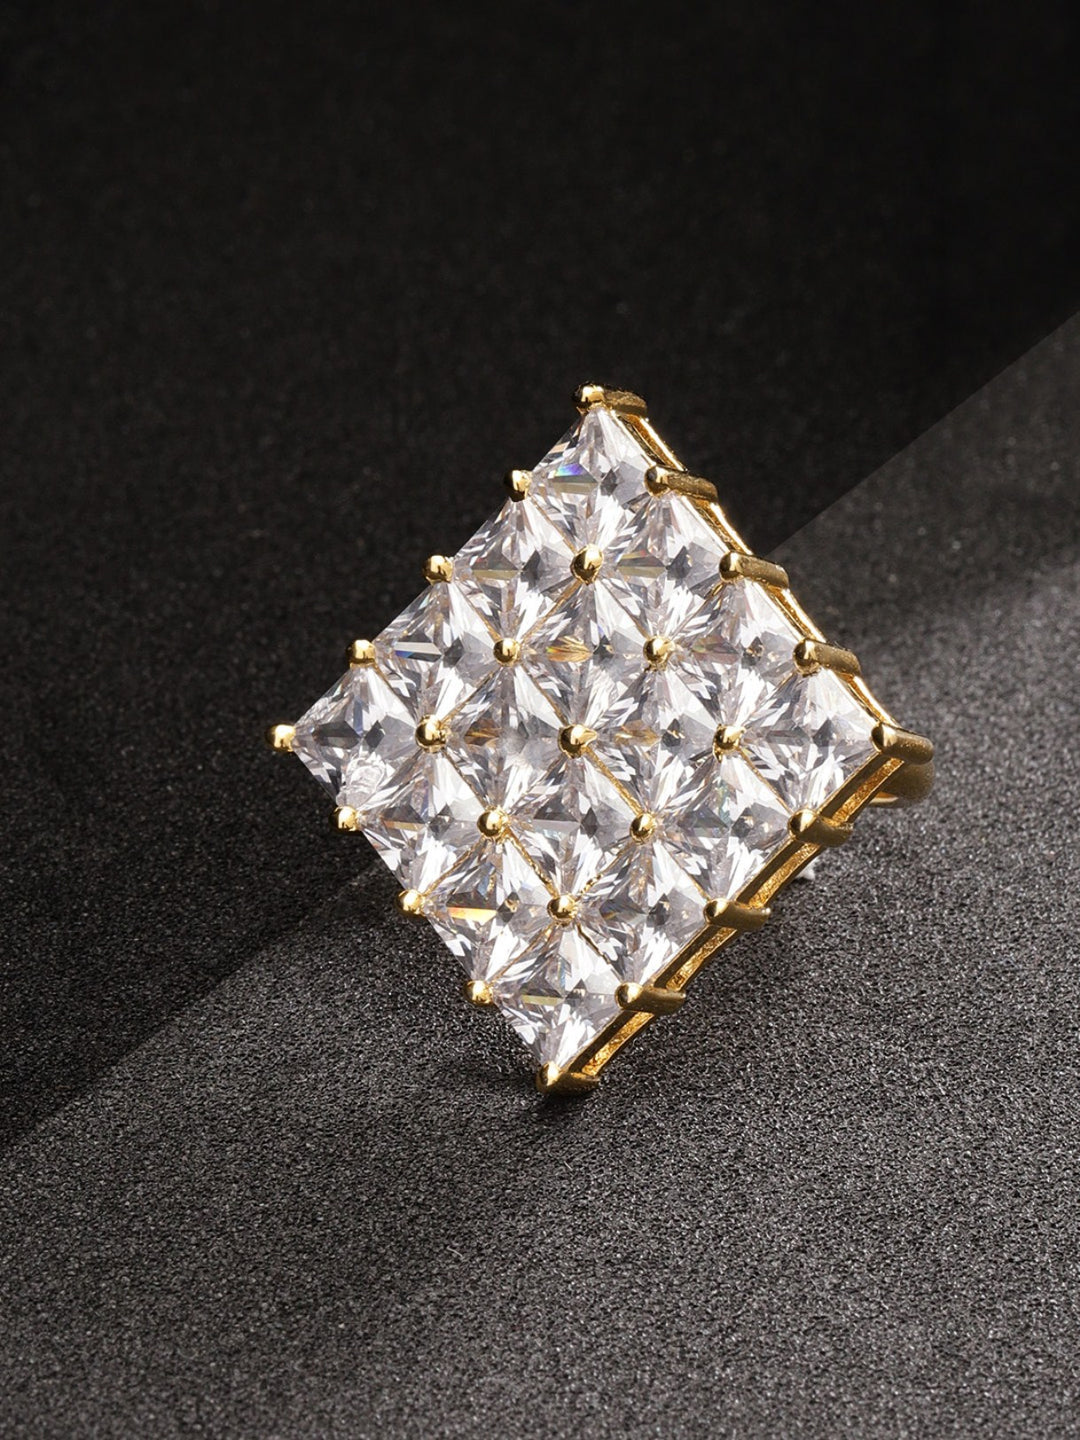 Geometric Shaped American Diamond Ring For Women And Girls